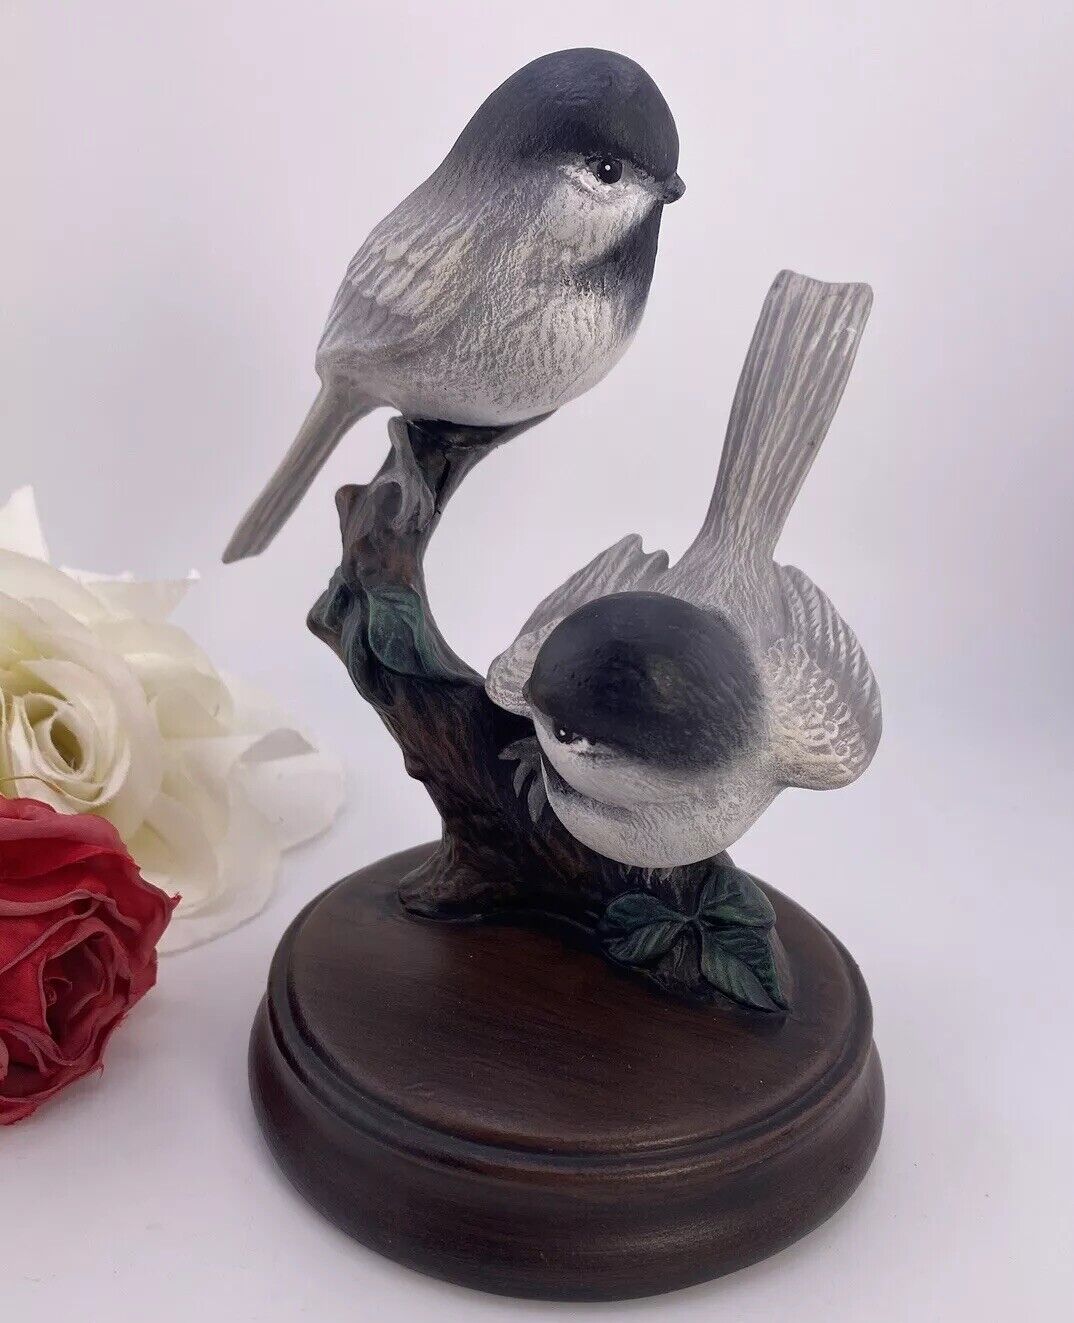 Vintage Bird Figurine 2 Chickadee Birds On Branch Hand Painted Ceramic 7” Tall